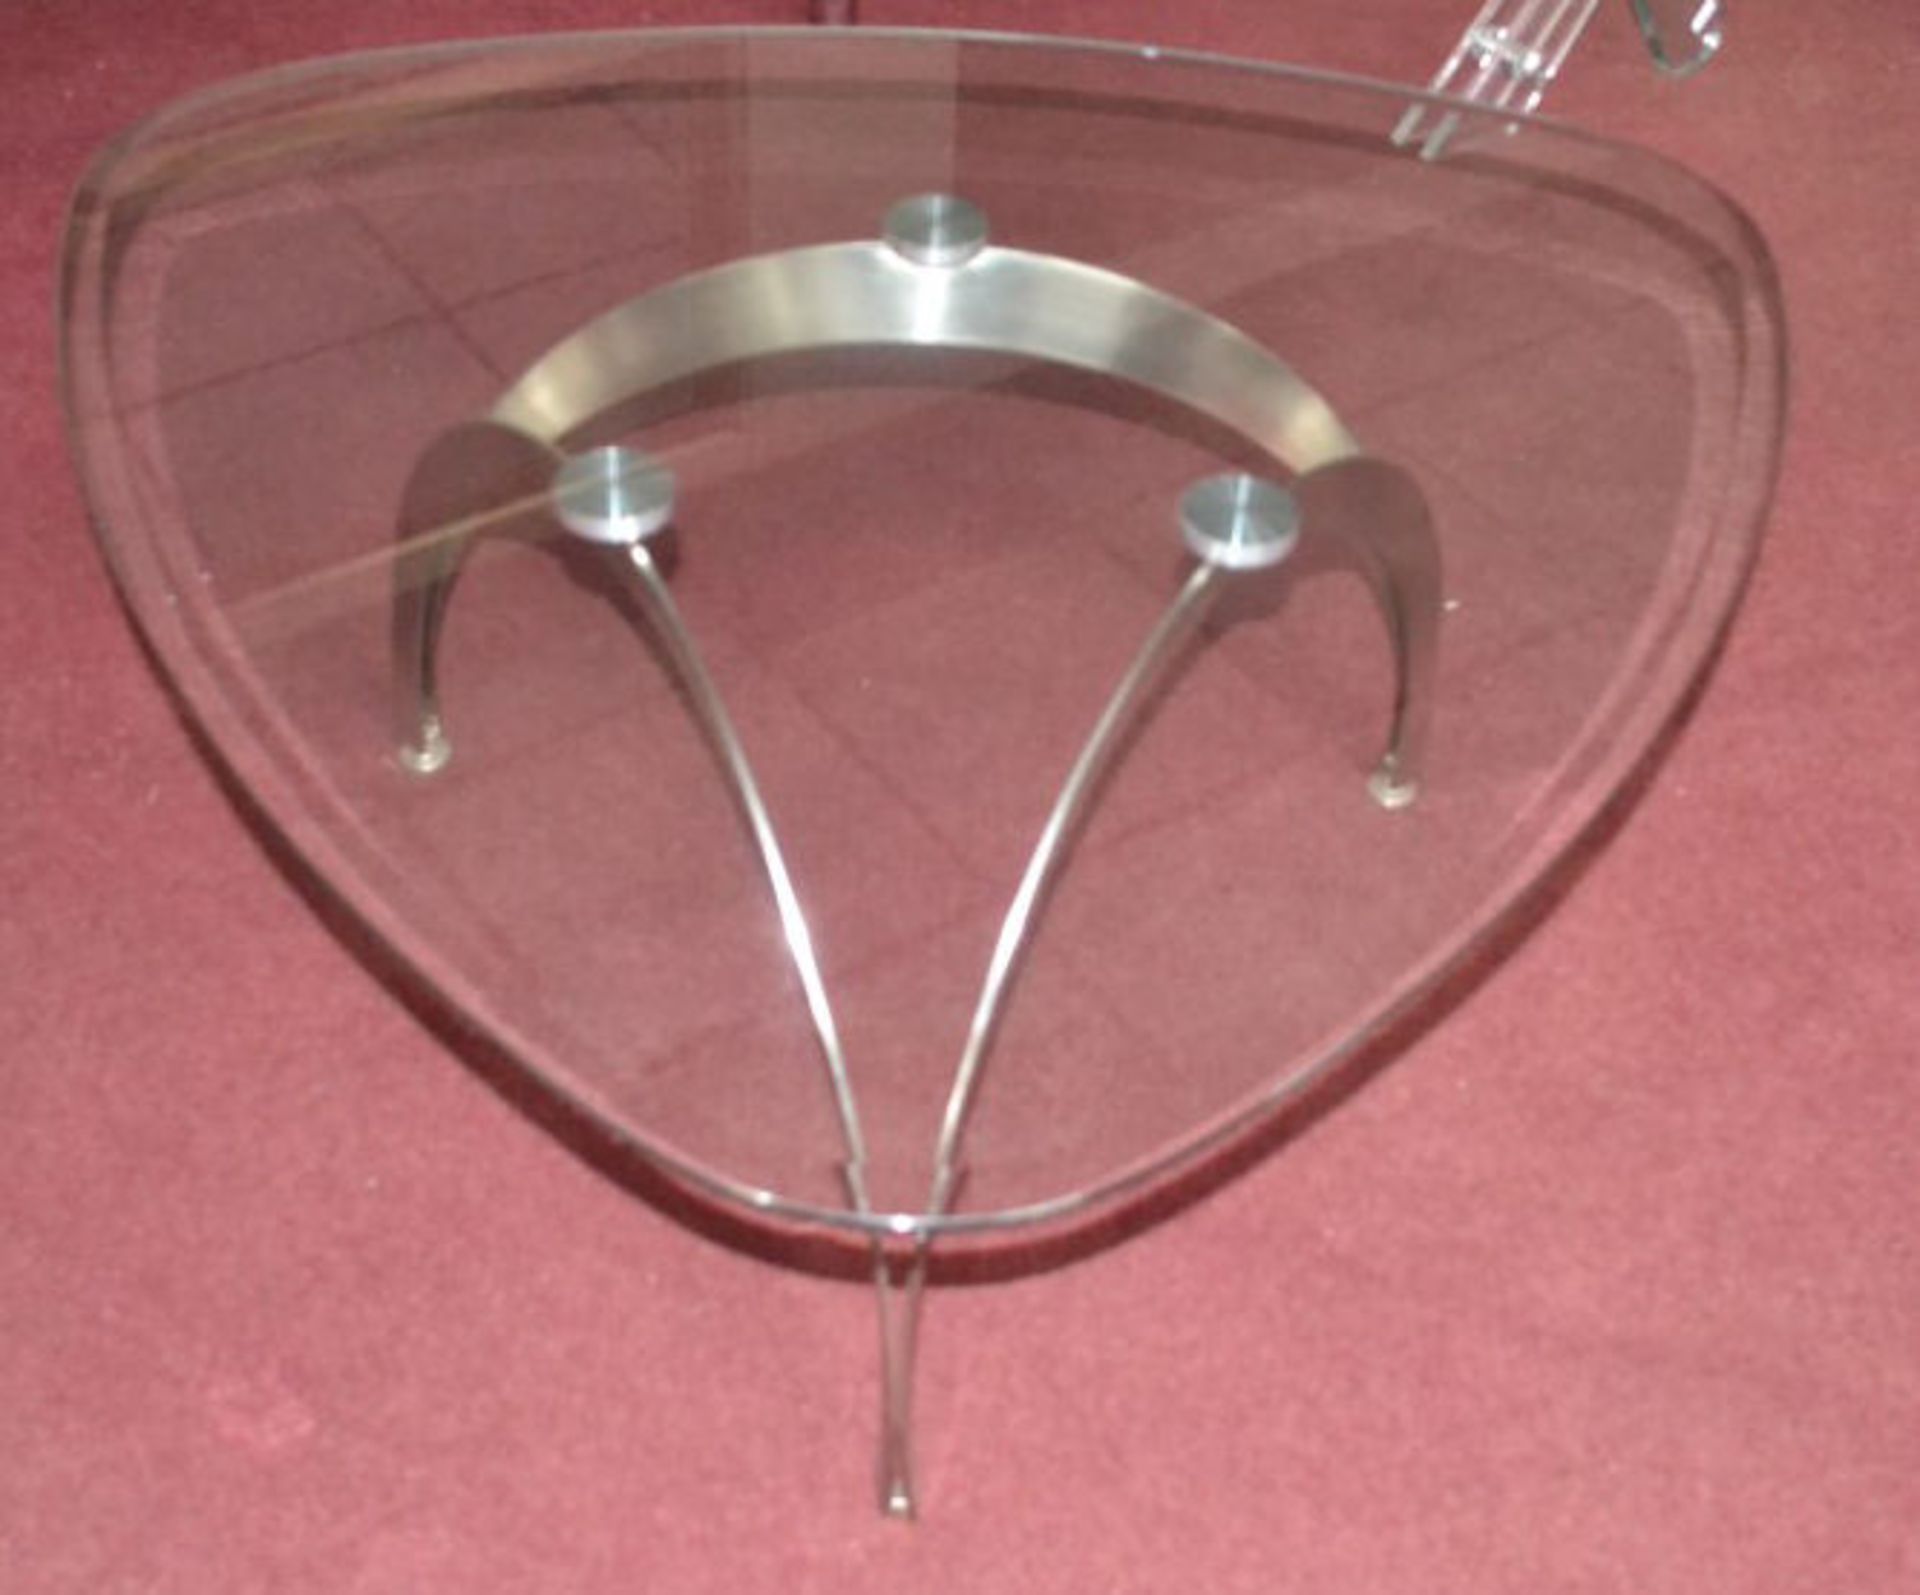 1 x Modern Triangular Glass Coffee Table with Satin Nickel Legs - Image 3 of 3